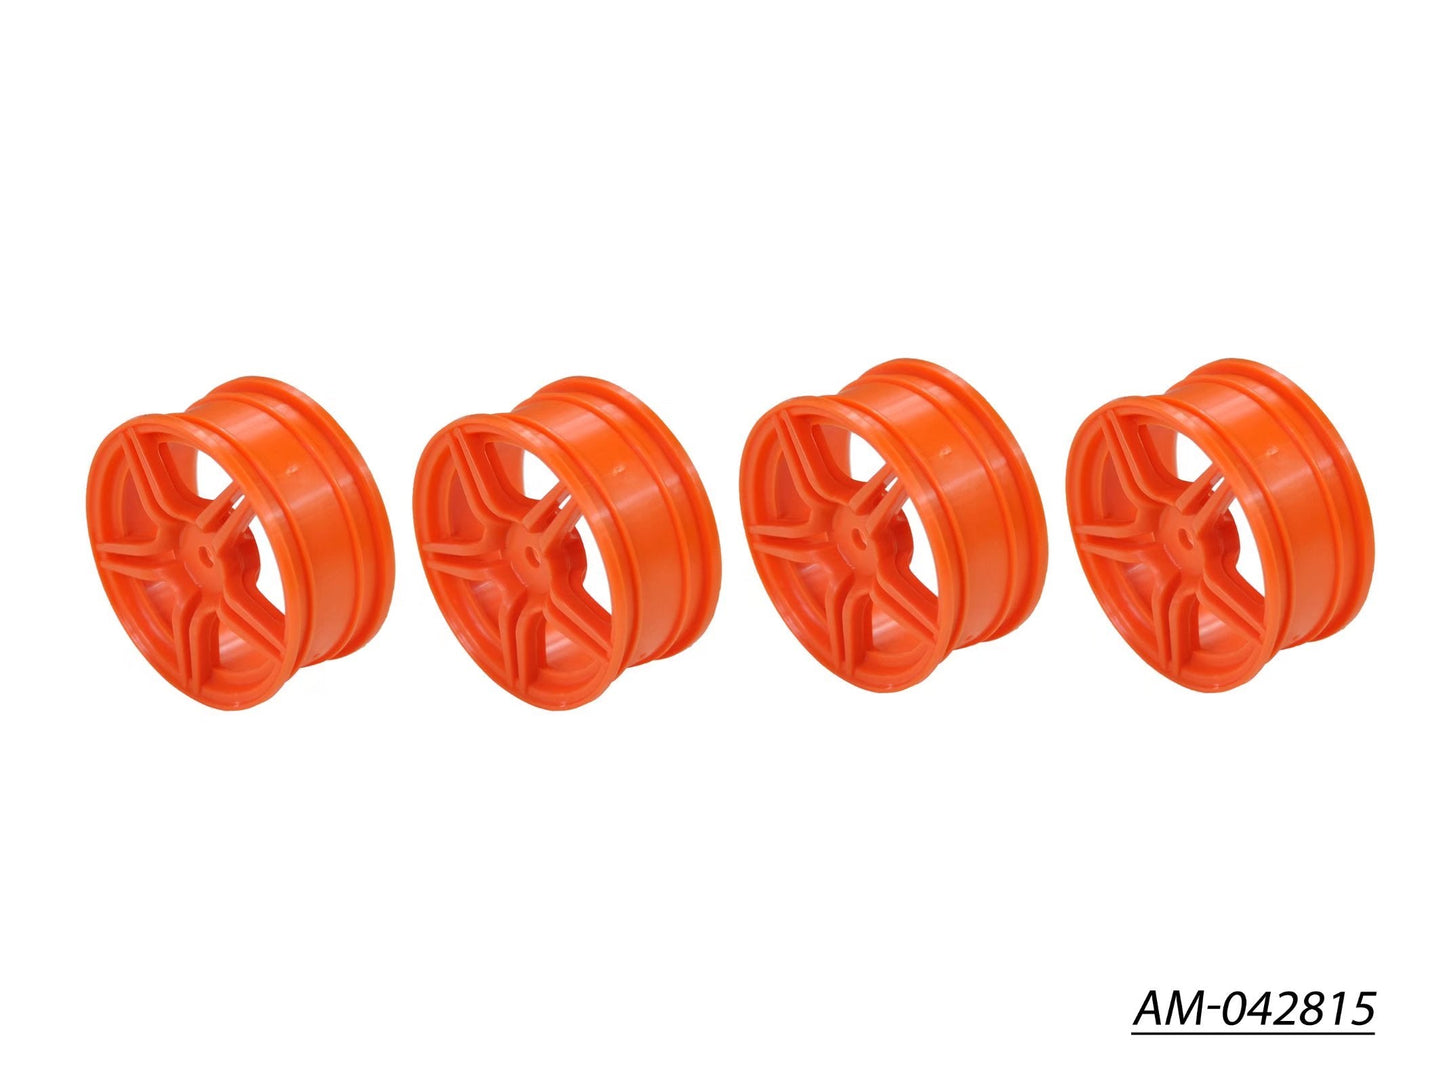 1/10 TC 5 Spoke Split Rims +0MM Offset Orange (4) AM-042815